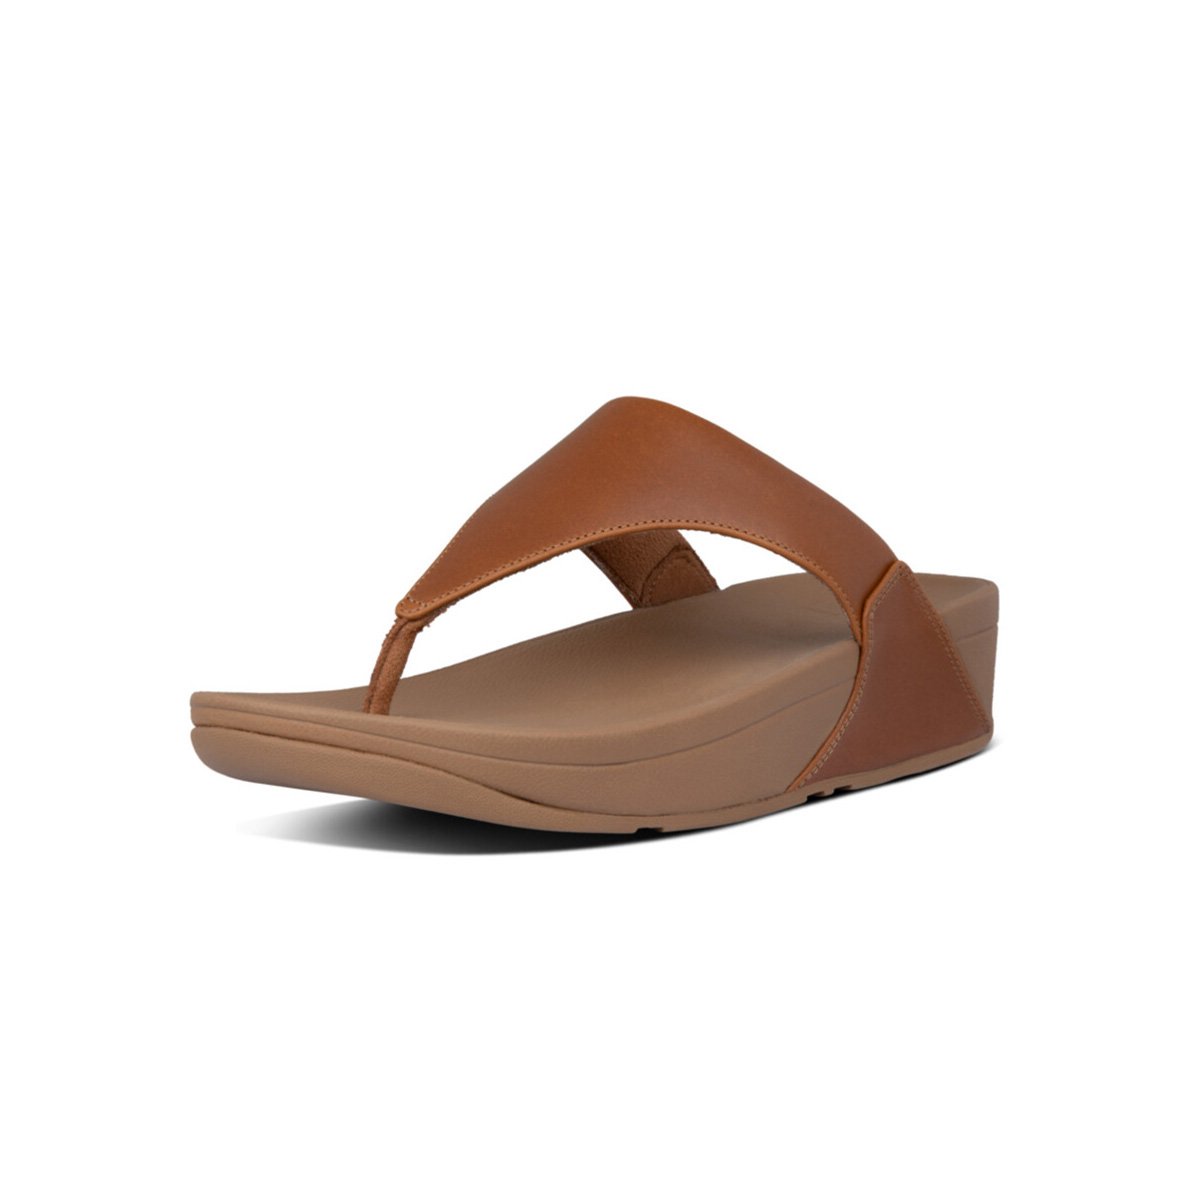 LULU Leather Toe-Post Sandals Light Tan side view